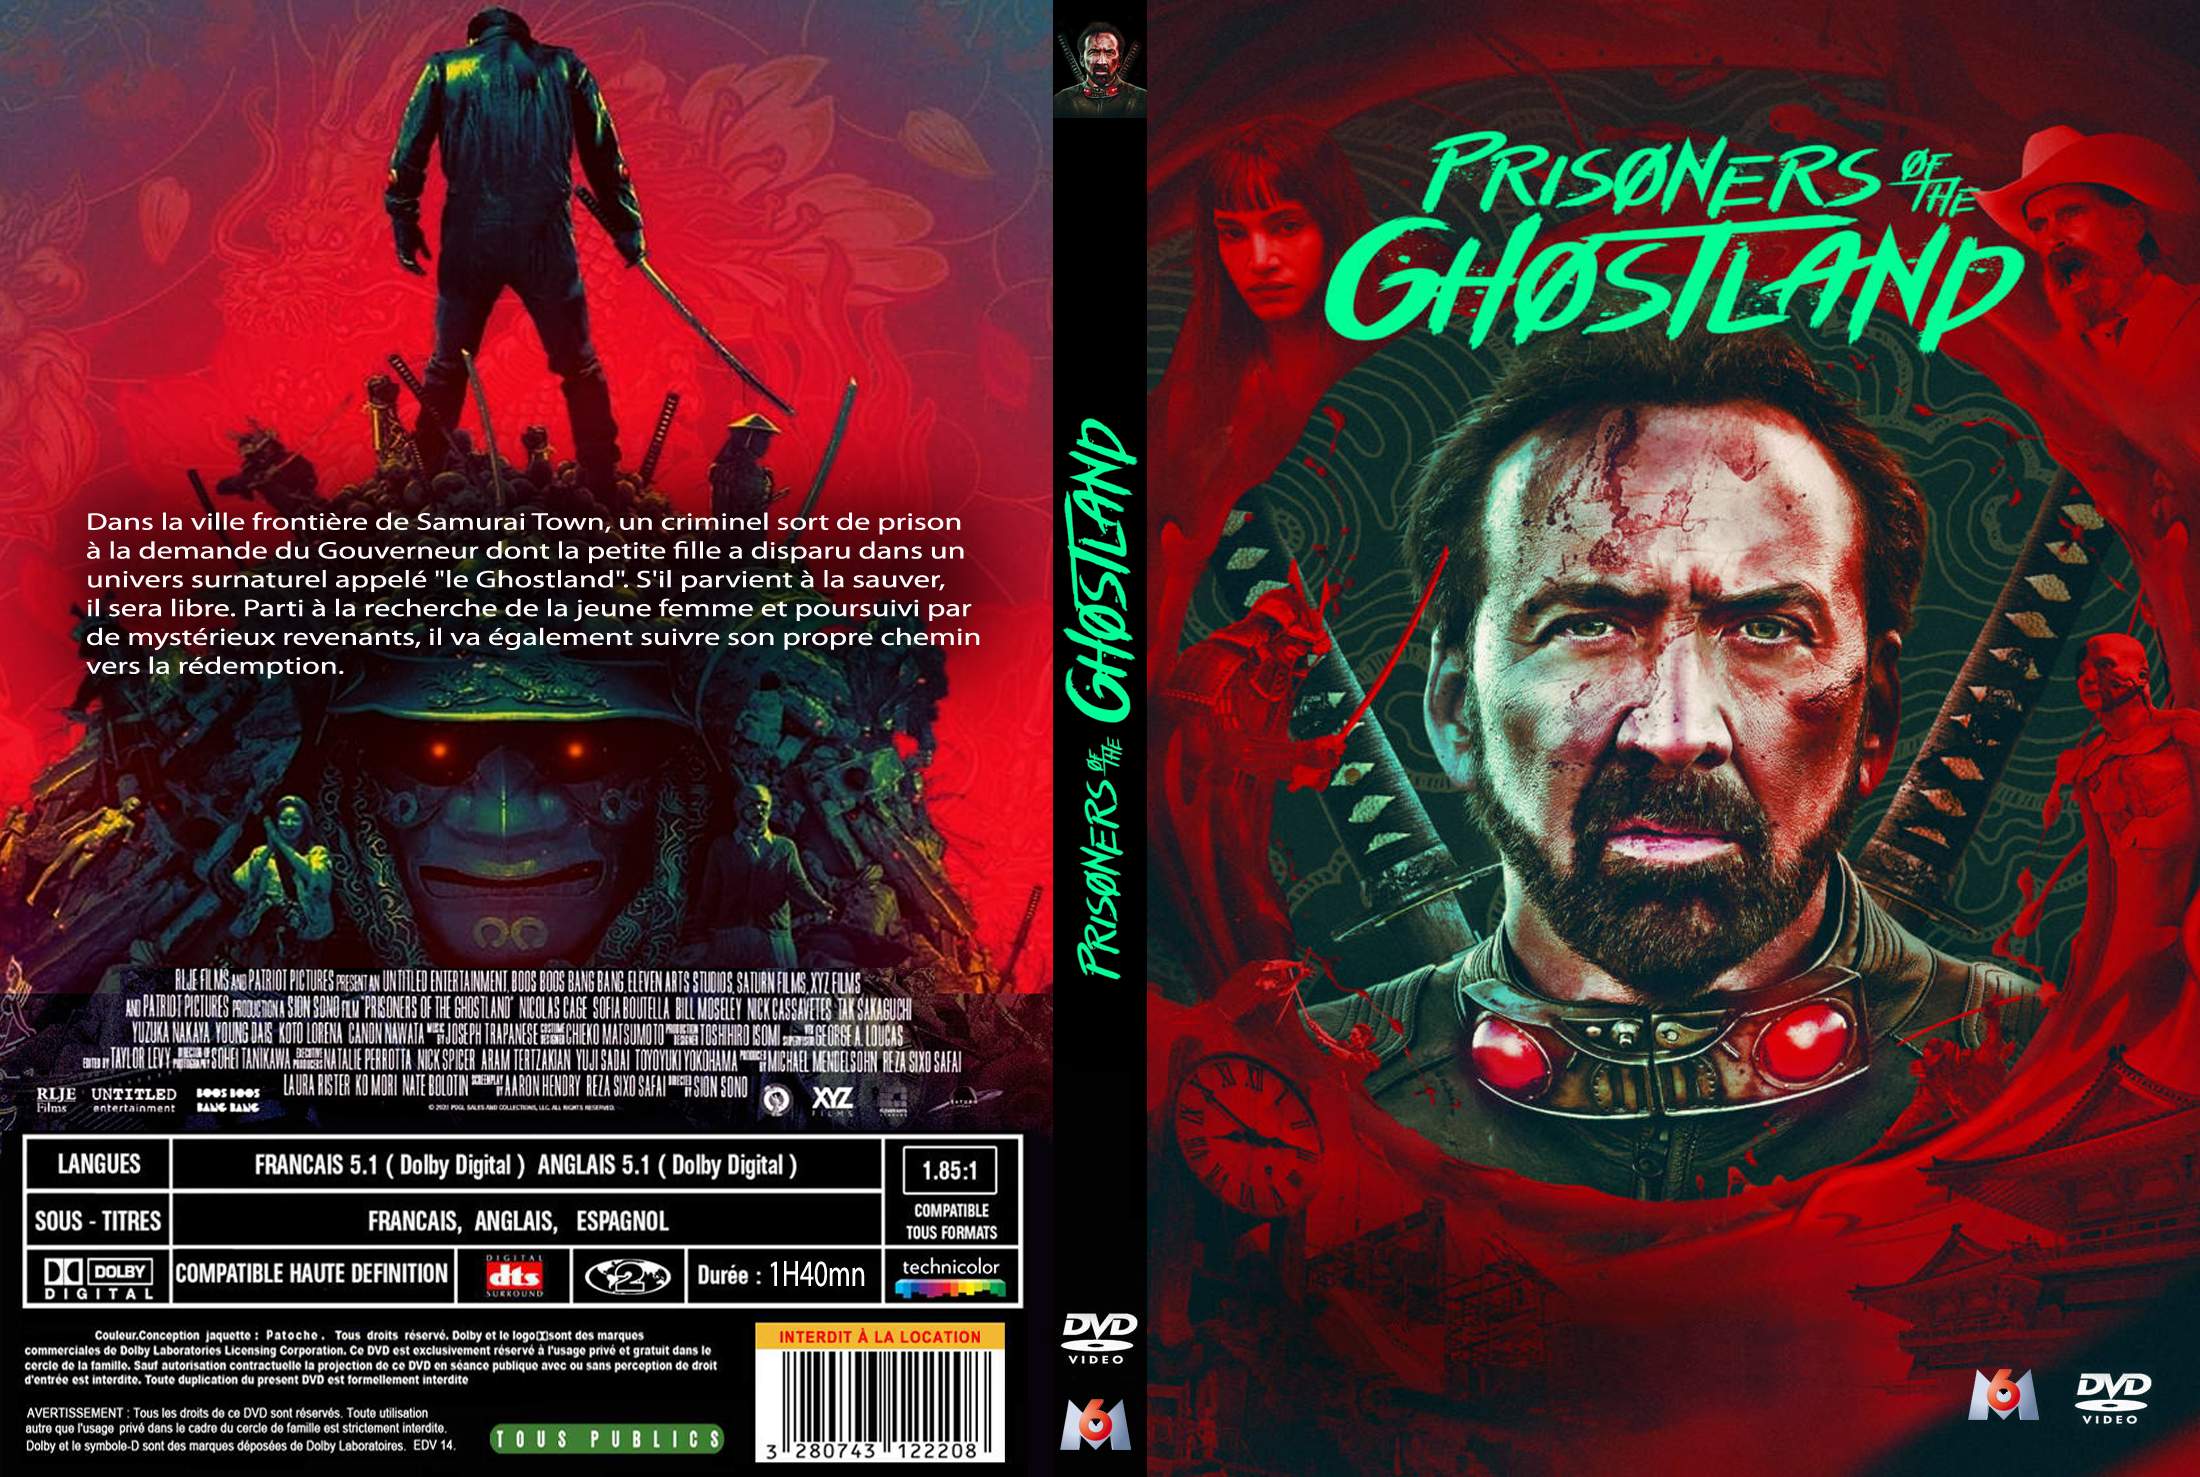 Jaquette DVD Prisoners of the Ghostland custom